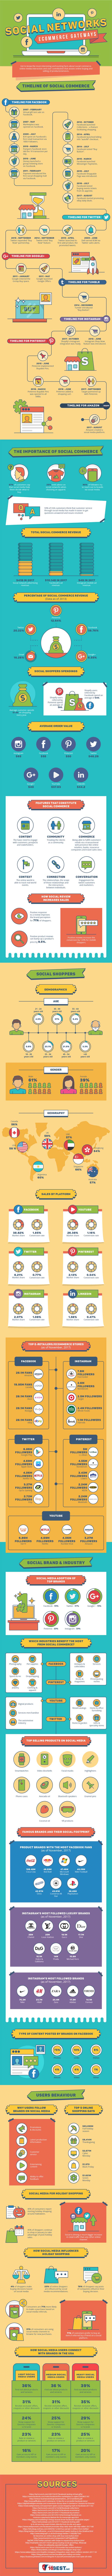 Social Networks Ecommerce Gateways: Check out the ecommerce possibilities for the top social networks: Facebook, Google+, Instagram, LinkedIn, Pinterest, Tumblr, Twitter, YouTube, and even Amazon. #ecommerce #socmedia